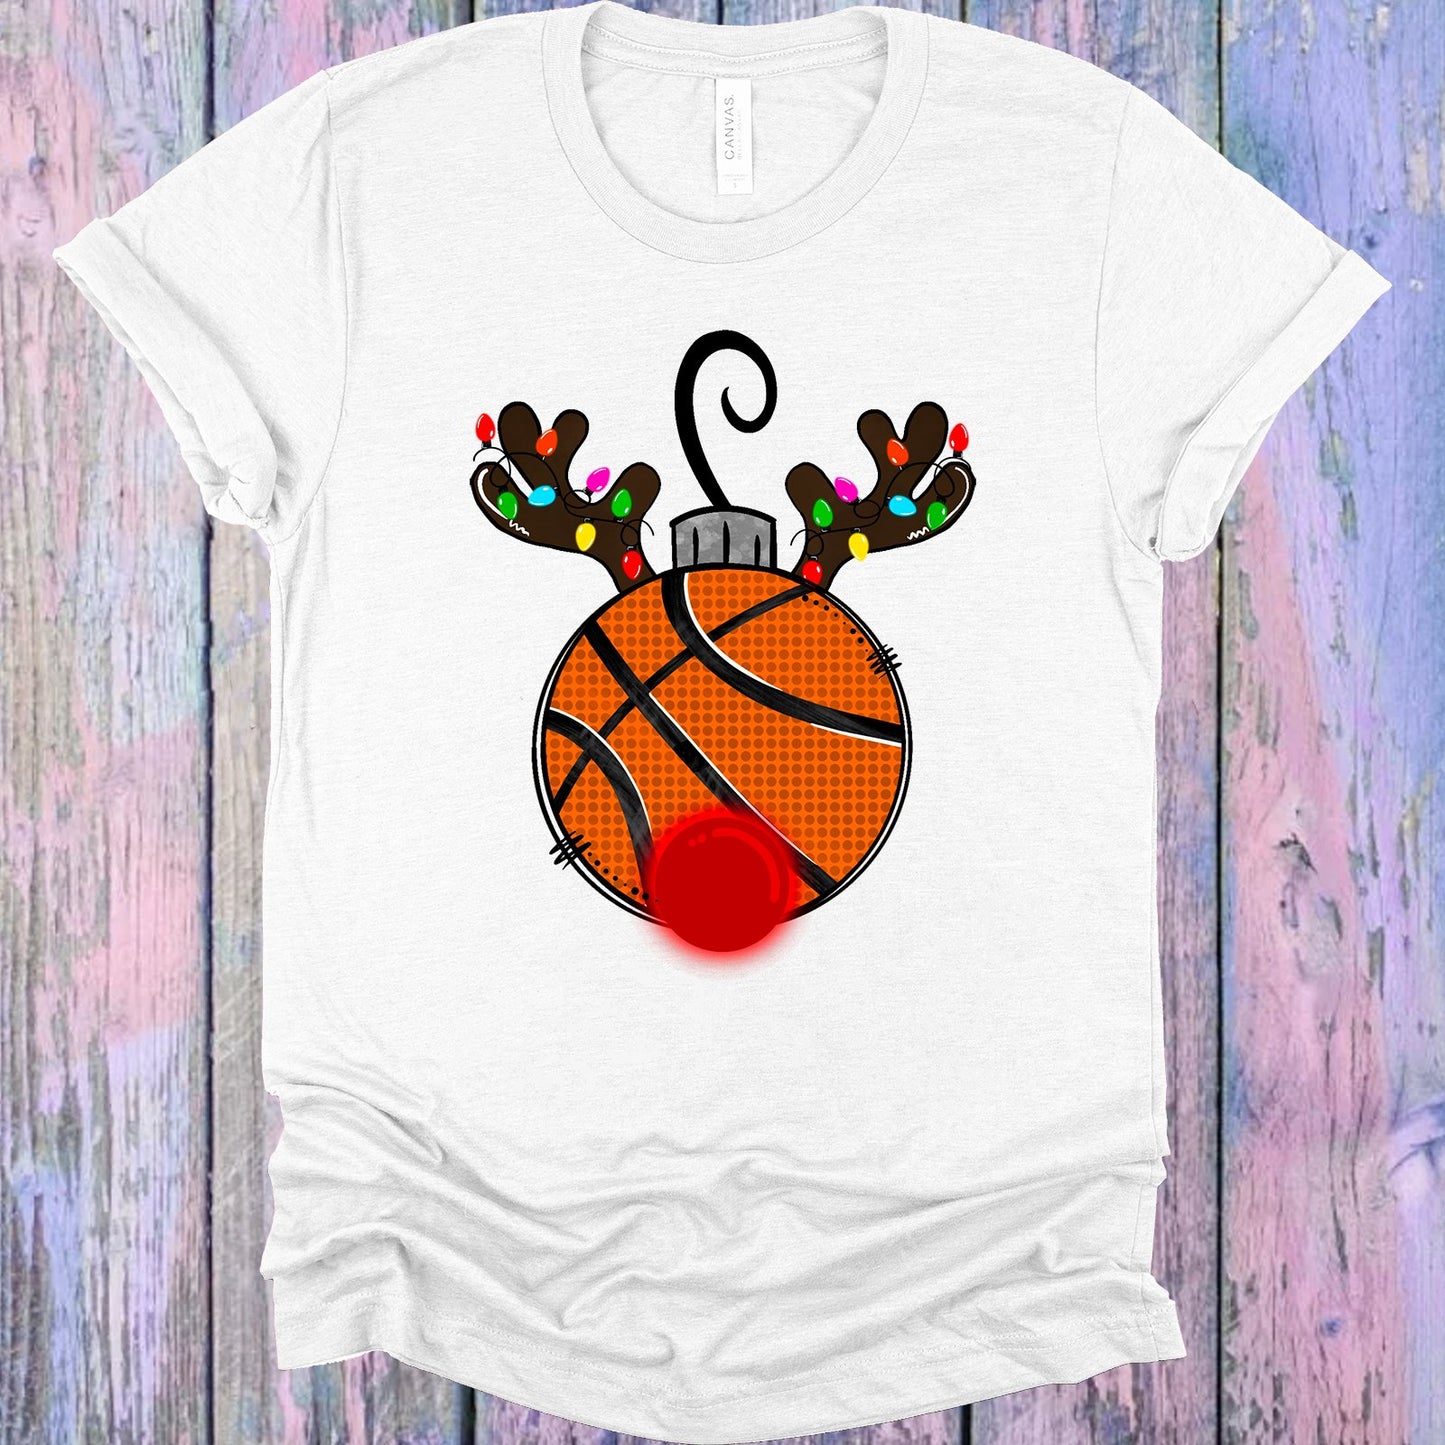 Basketball Reindeer Graphic Tee Graphic Tee